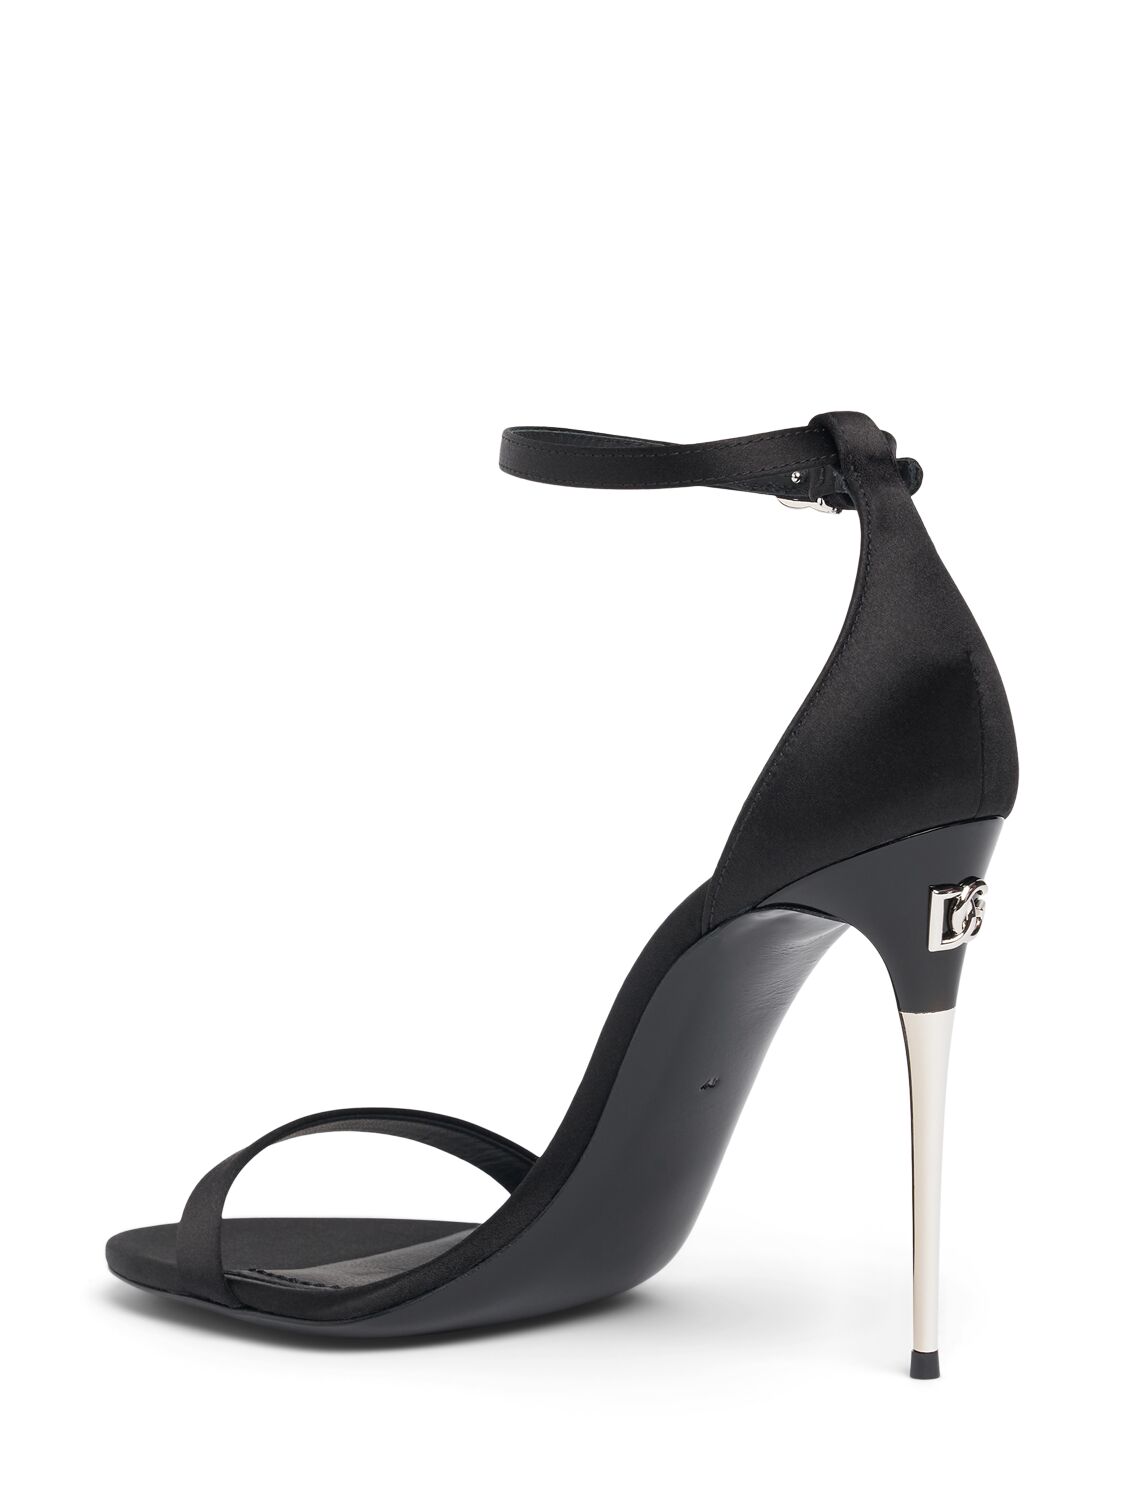 Shop Dolce & Gabbana 105mm Keira Satin Sandals In Black